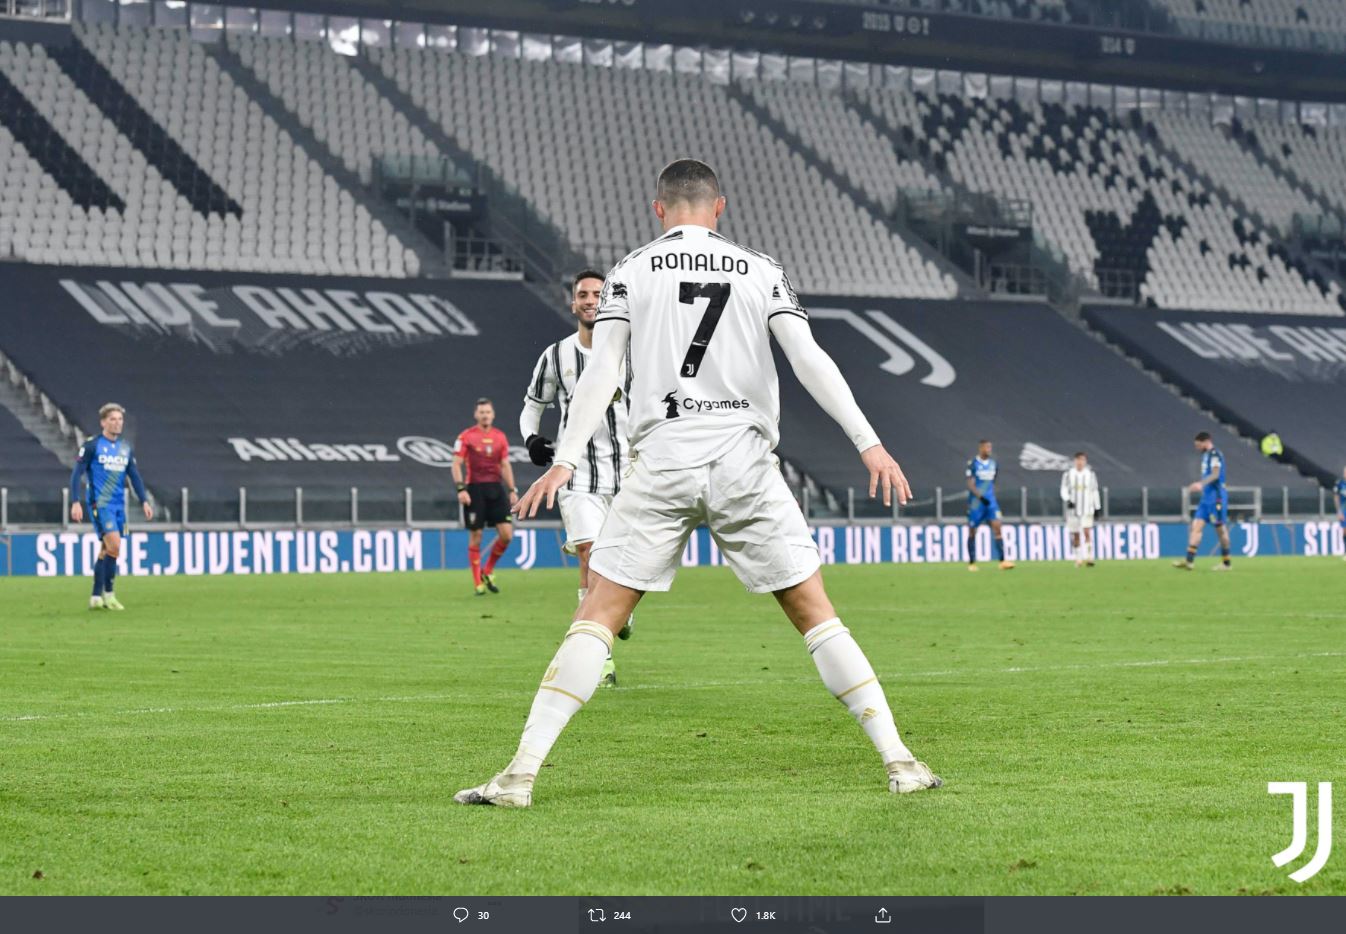 Cristiano Ronaldo Lewati Rekor Pele setelah Cetak 2 Gol ke Gawang Udinese